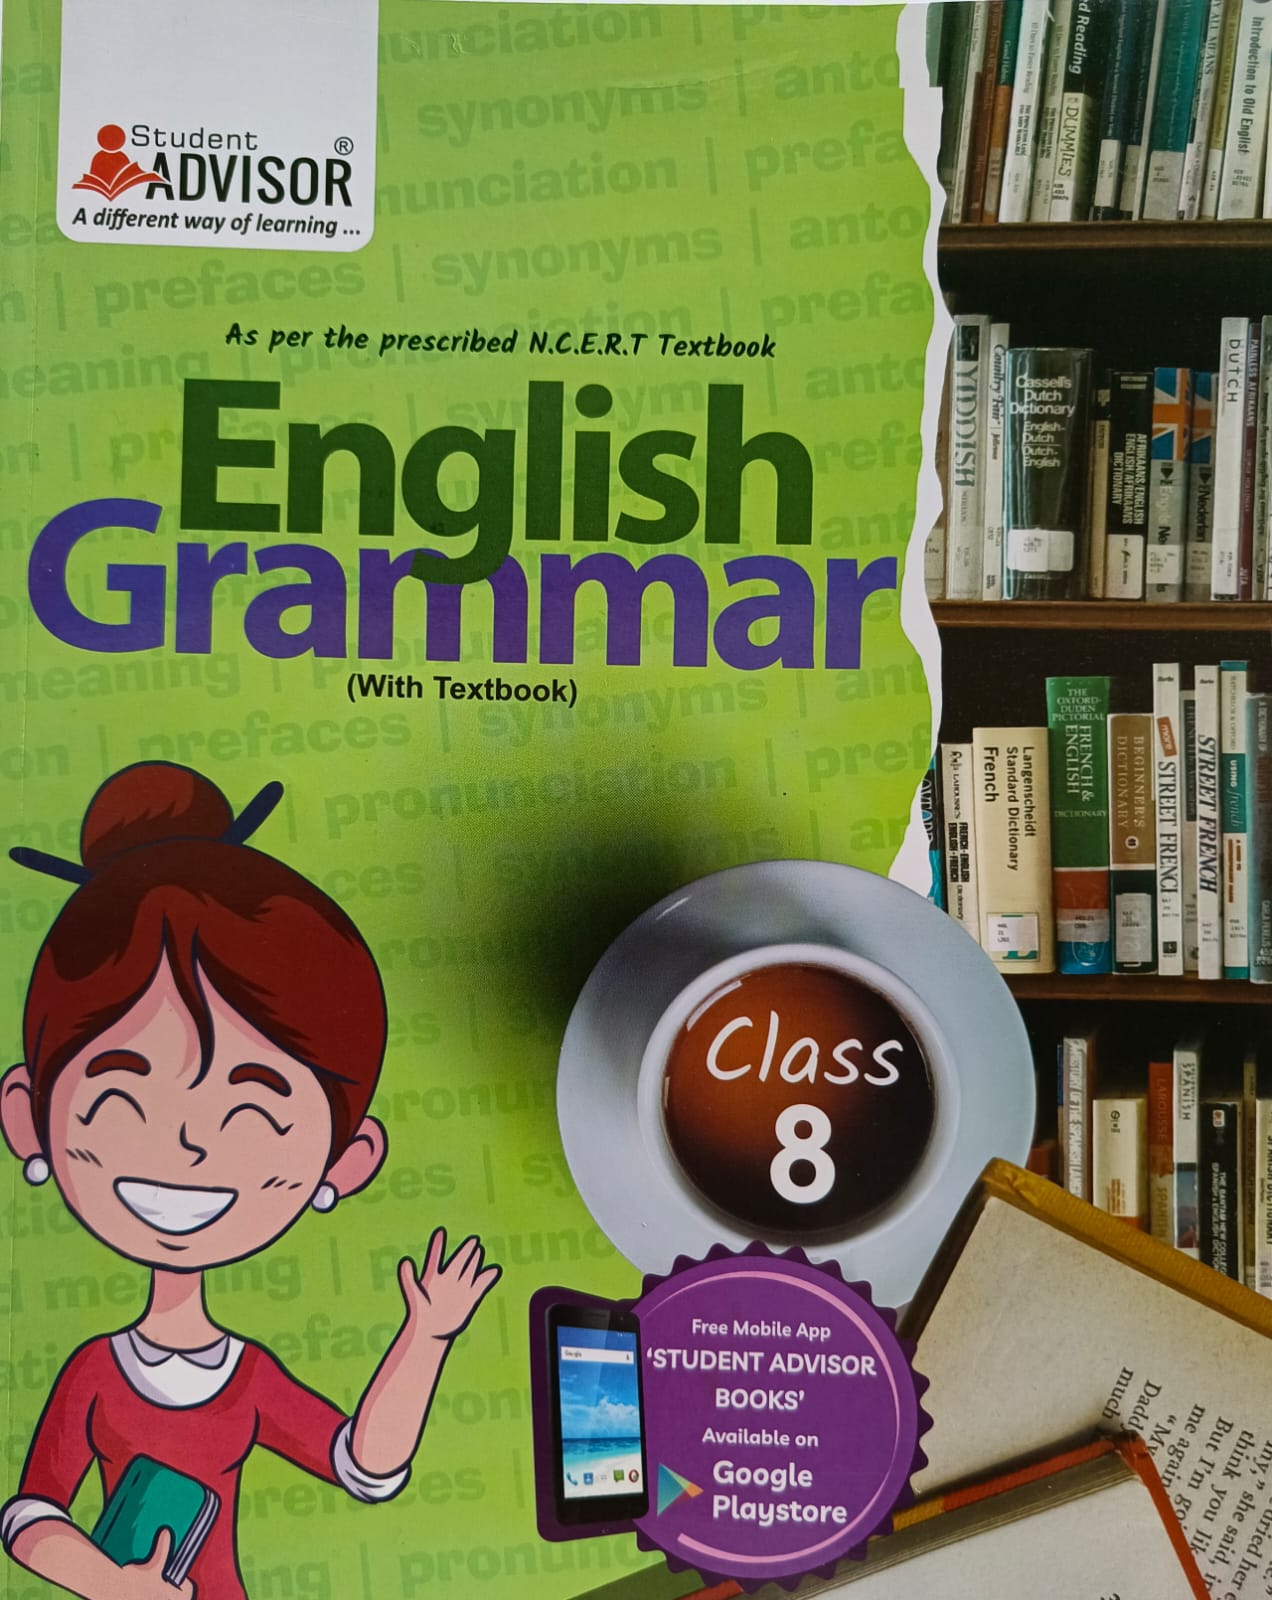 CLASS 8 ENGLISH GRAMMAR BY STUDENT ADVISOR - saraswatibook